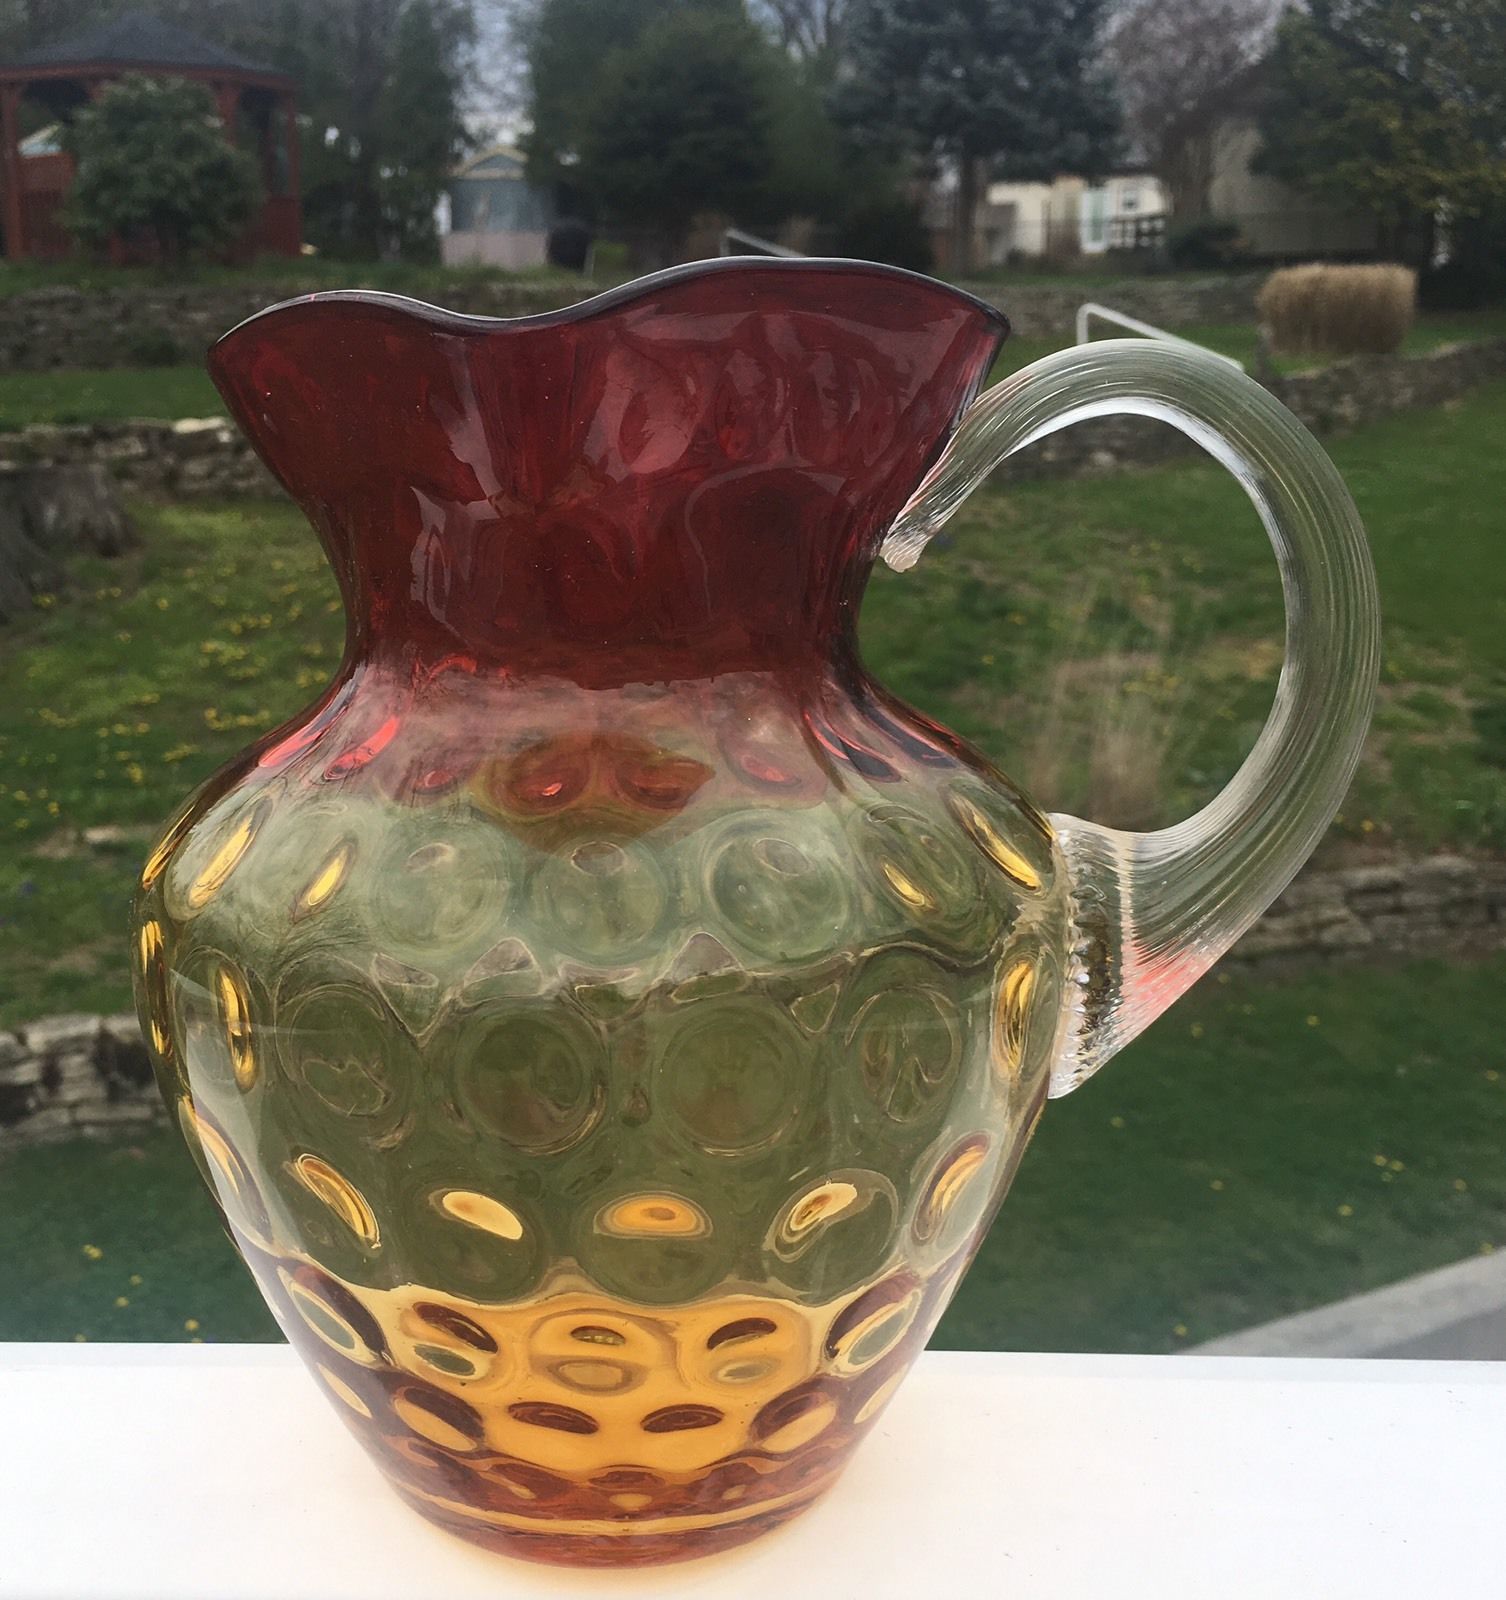 Antique-Amberina-Pitcher-New-England-Glass-Company.jpg